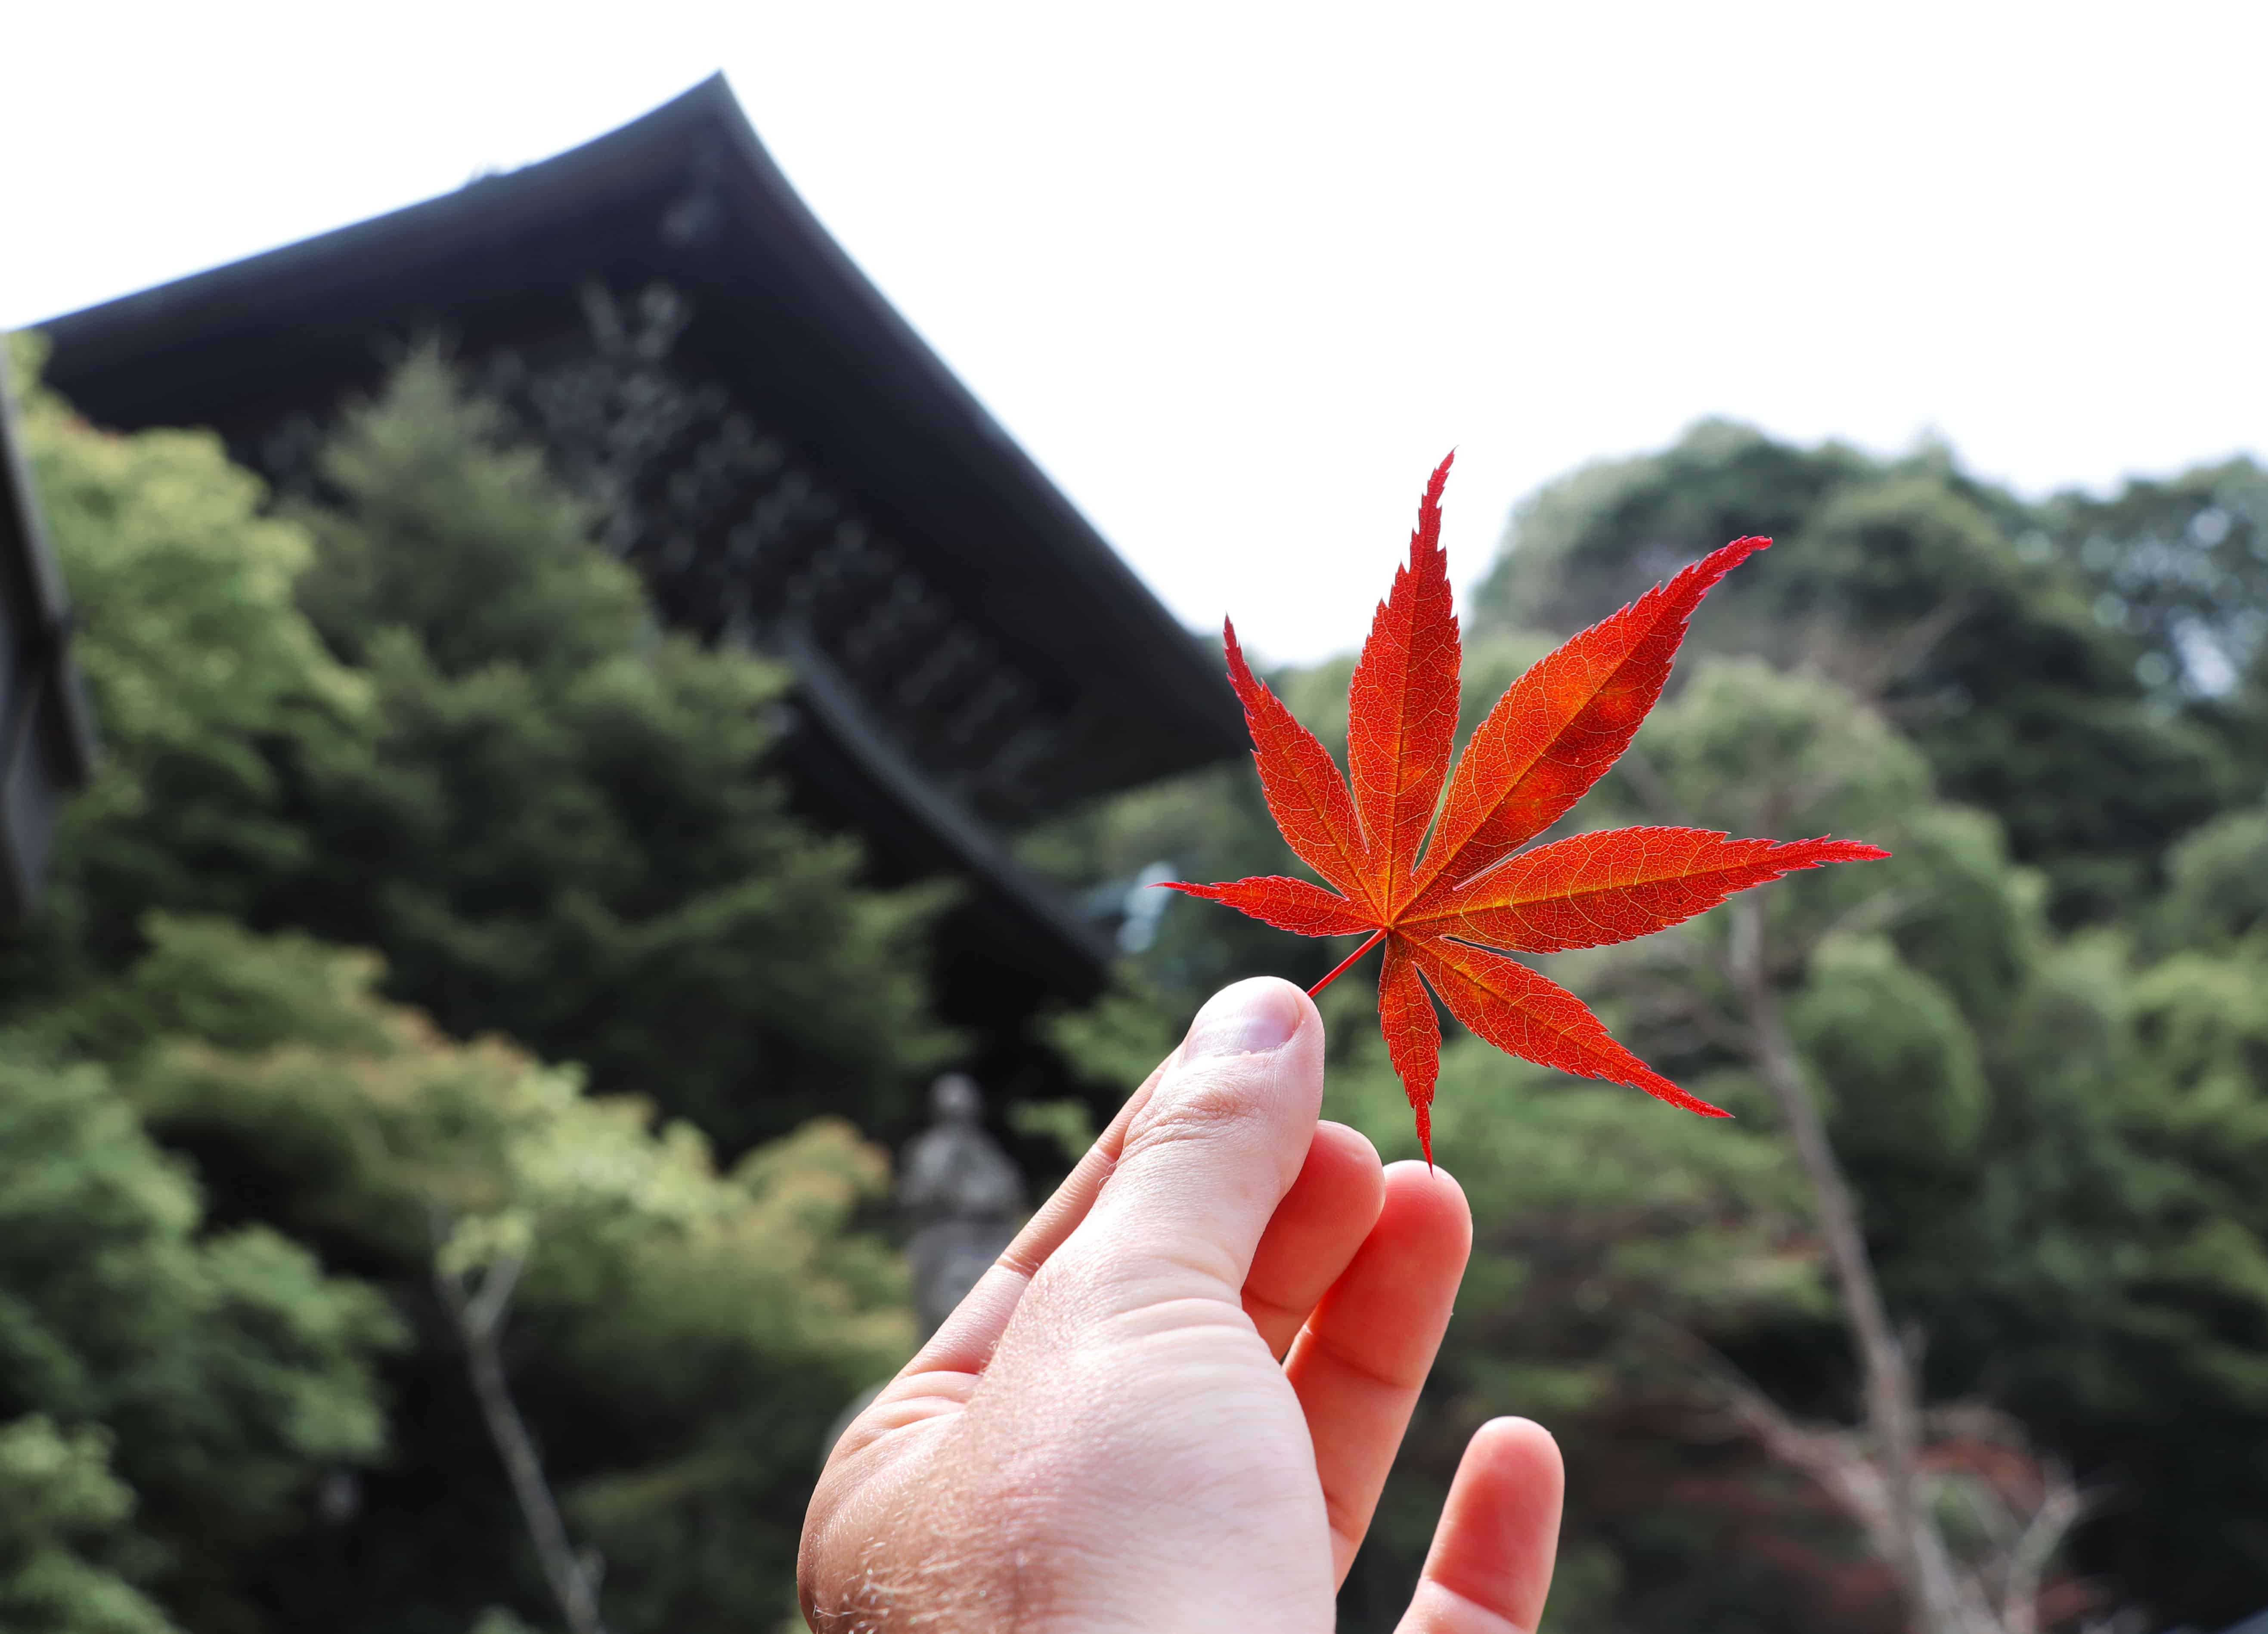 Leaf in a temple in Japan hatzav aviv photography